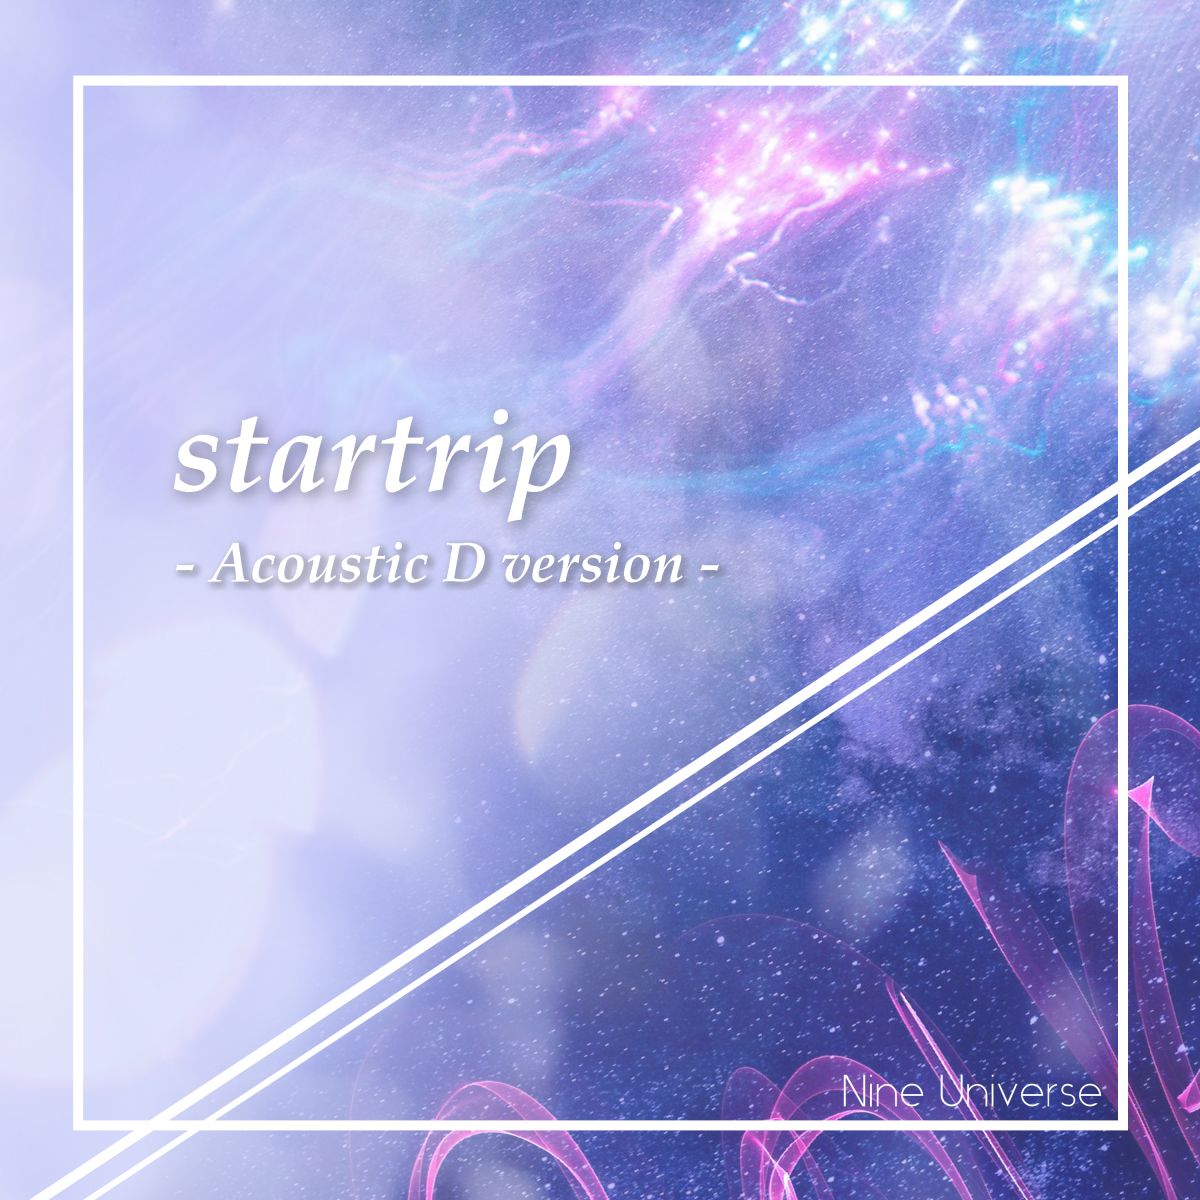 startrip - Acoustic D version -